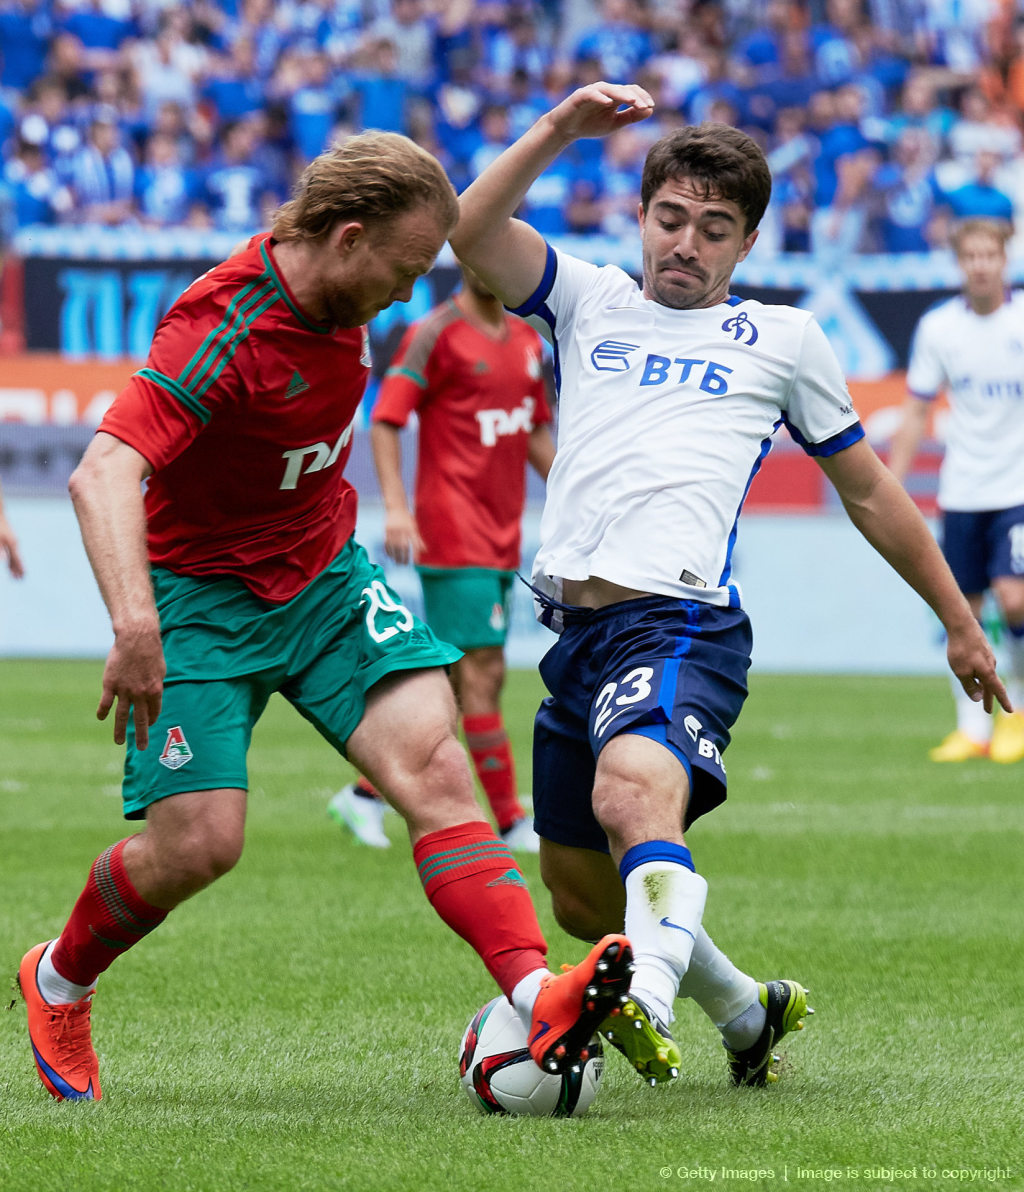 Lokomotiv Moscow v Dinamo Moscow — Russian Premier League